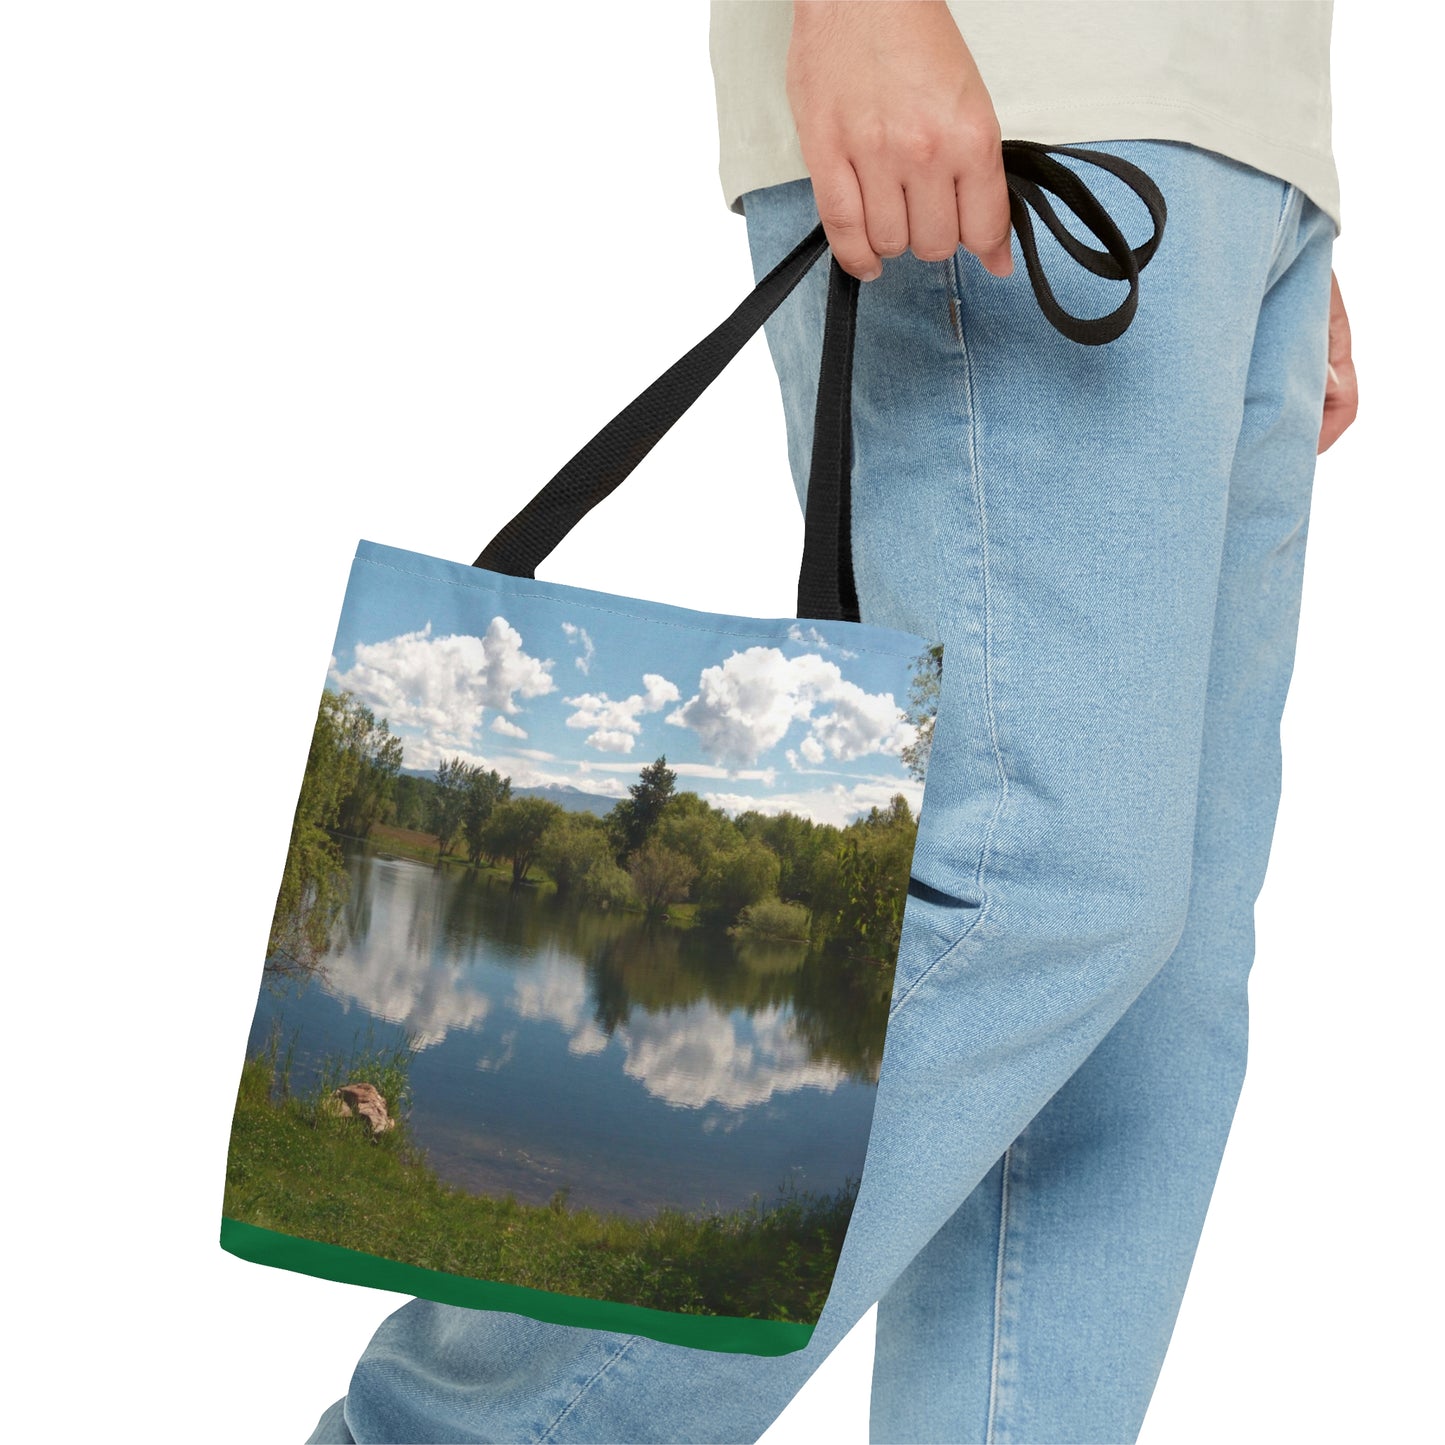 Peaceful Pond Tote Bag